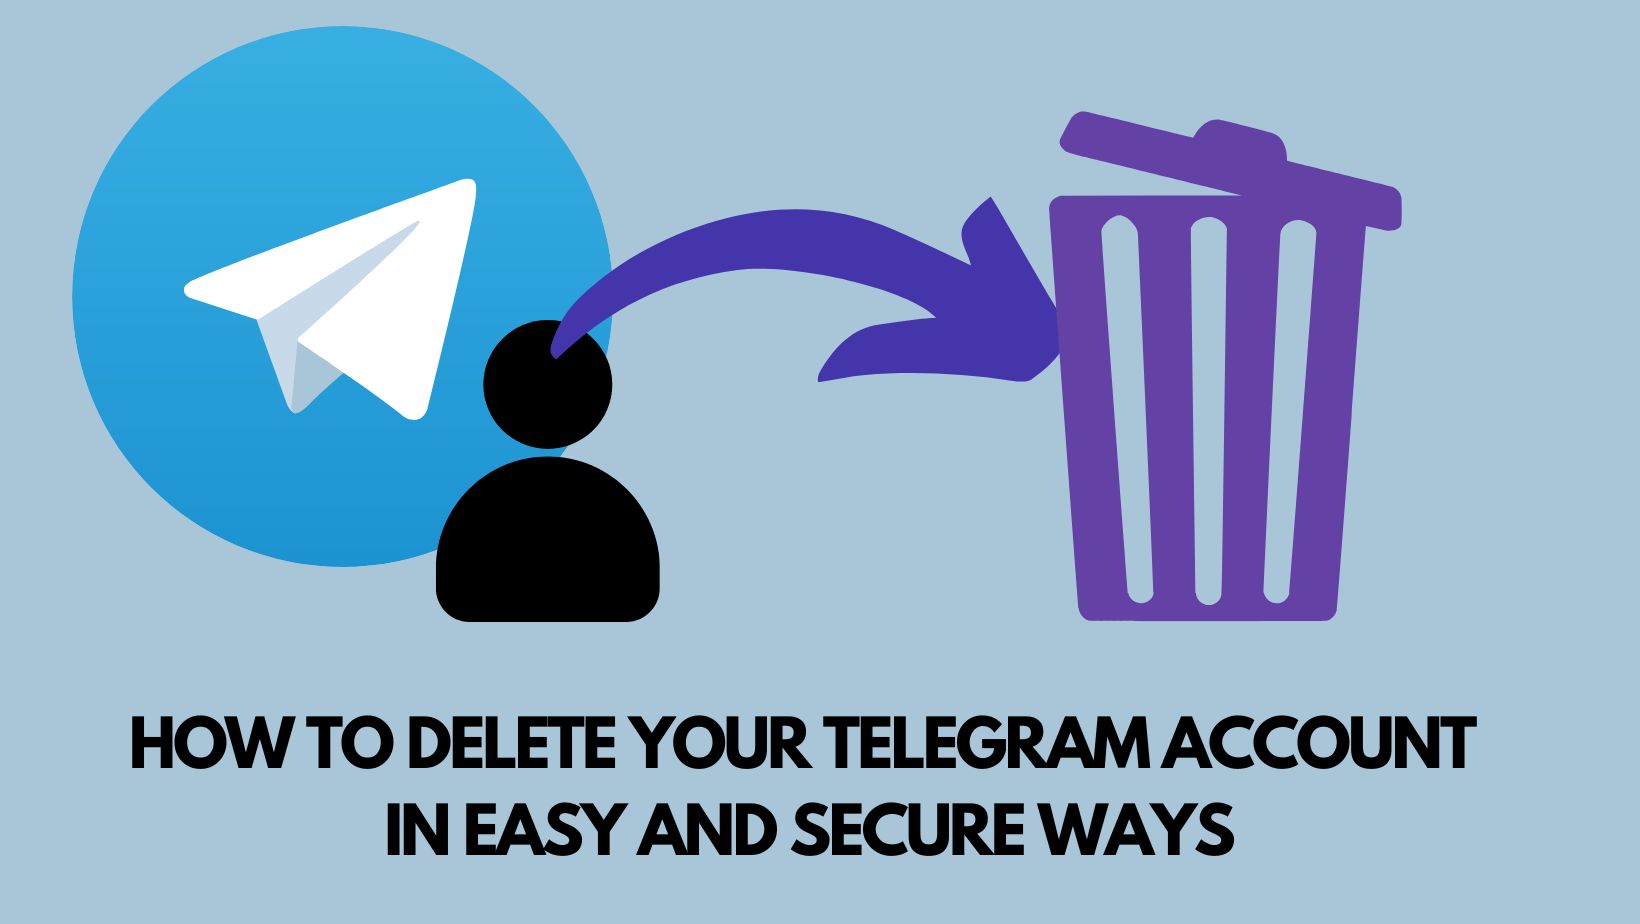 Deleted account Telegram. Telegram account. My Telegram org delete account. Https my telegram org deactivate